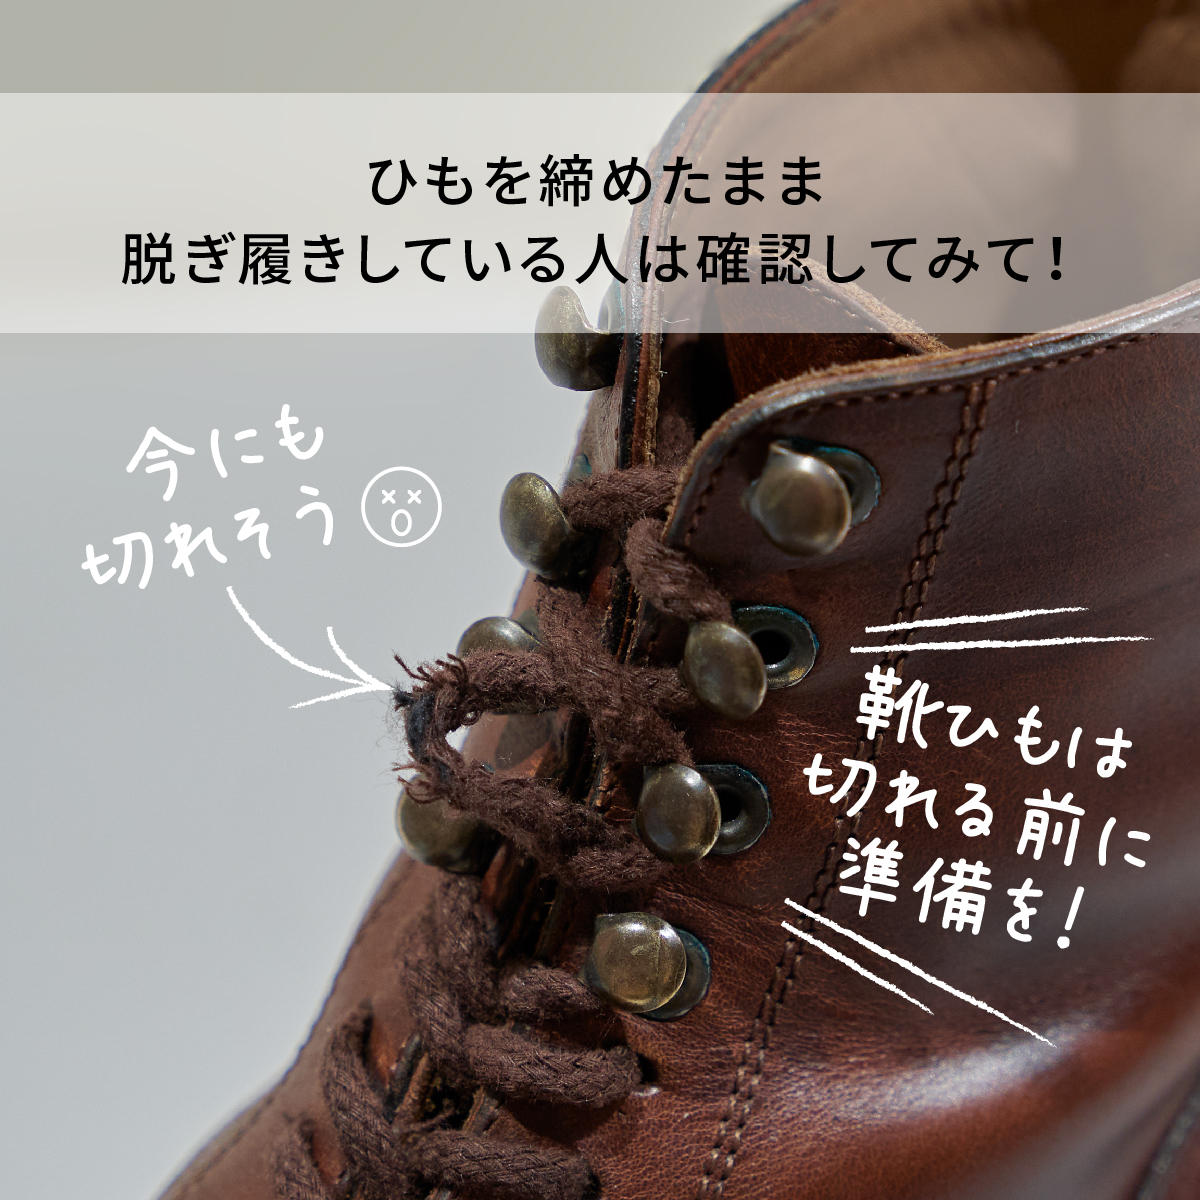 shoelace_02.jpg